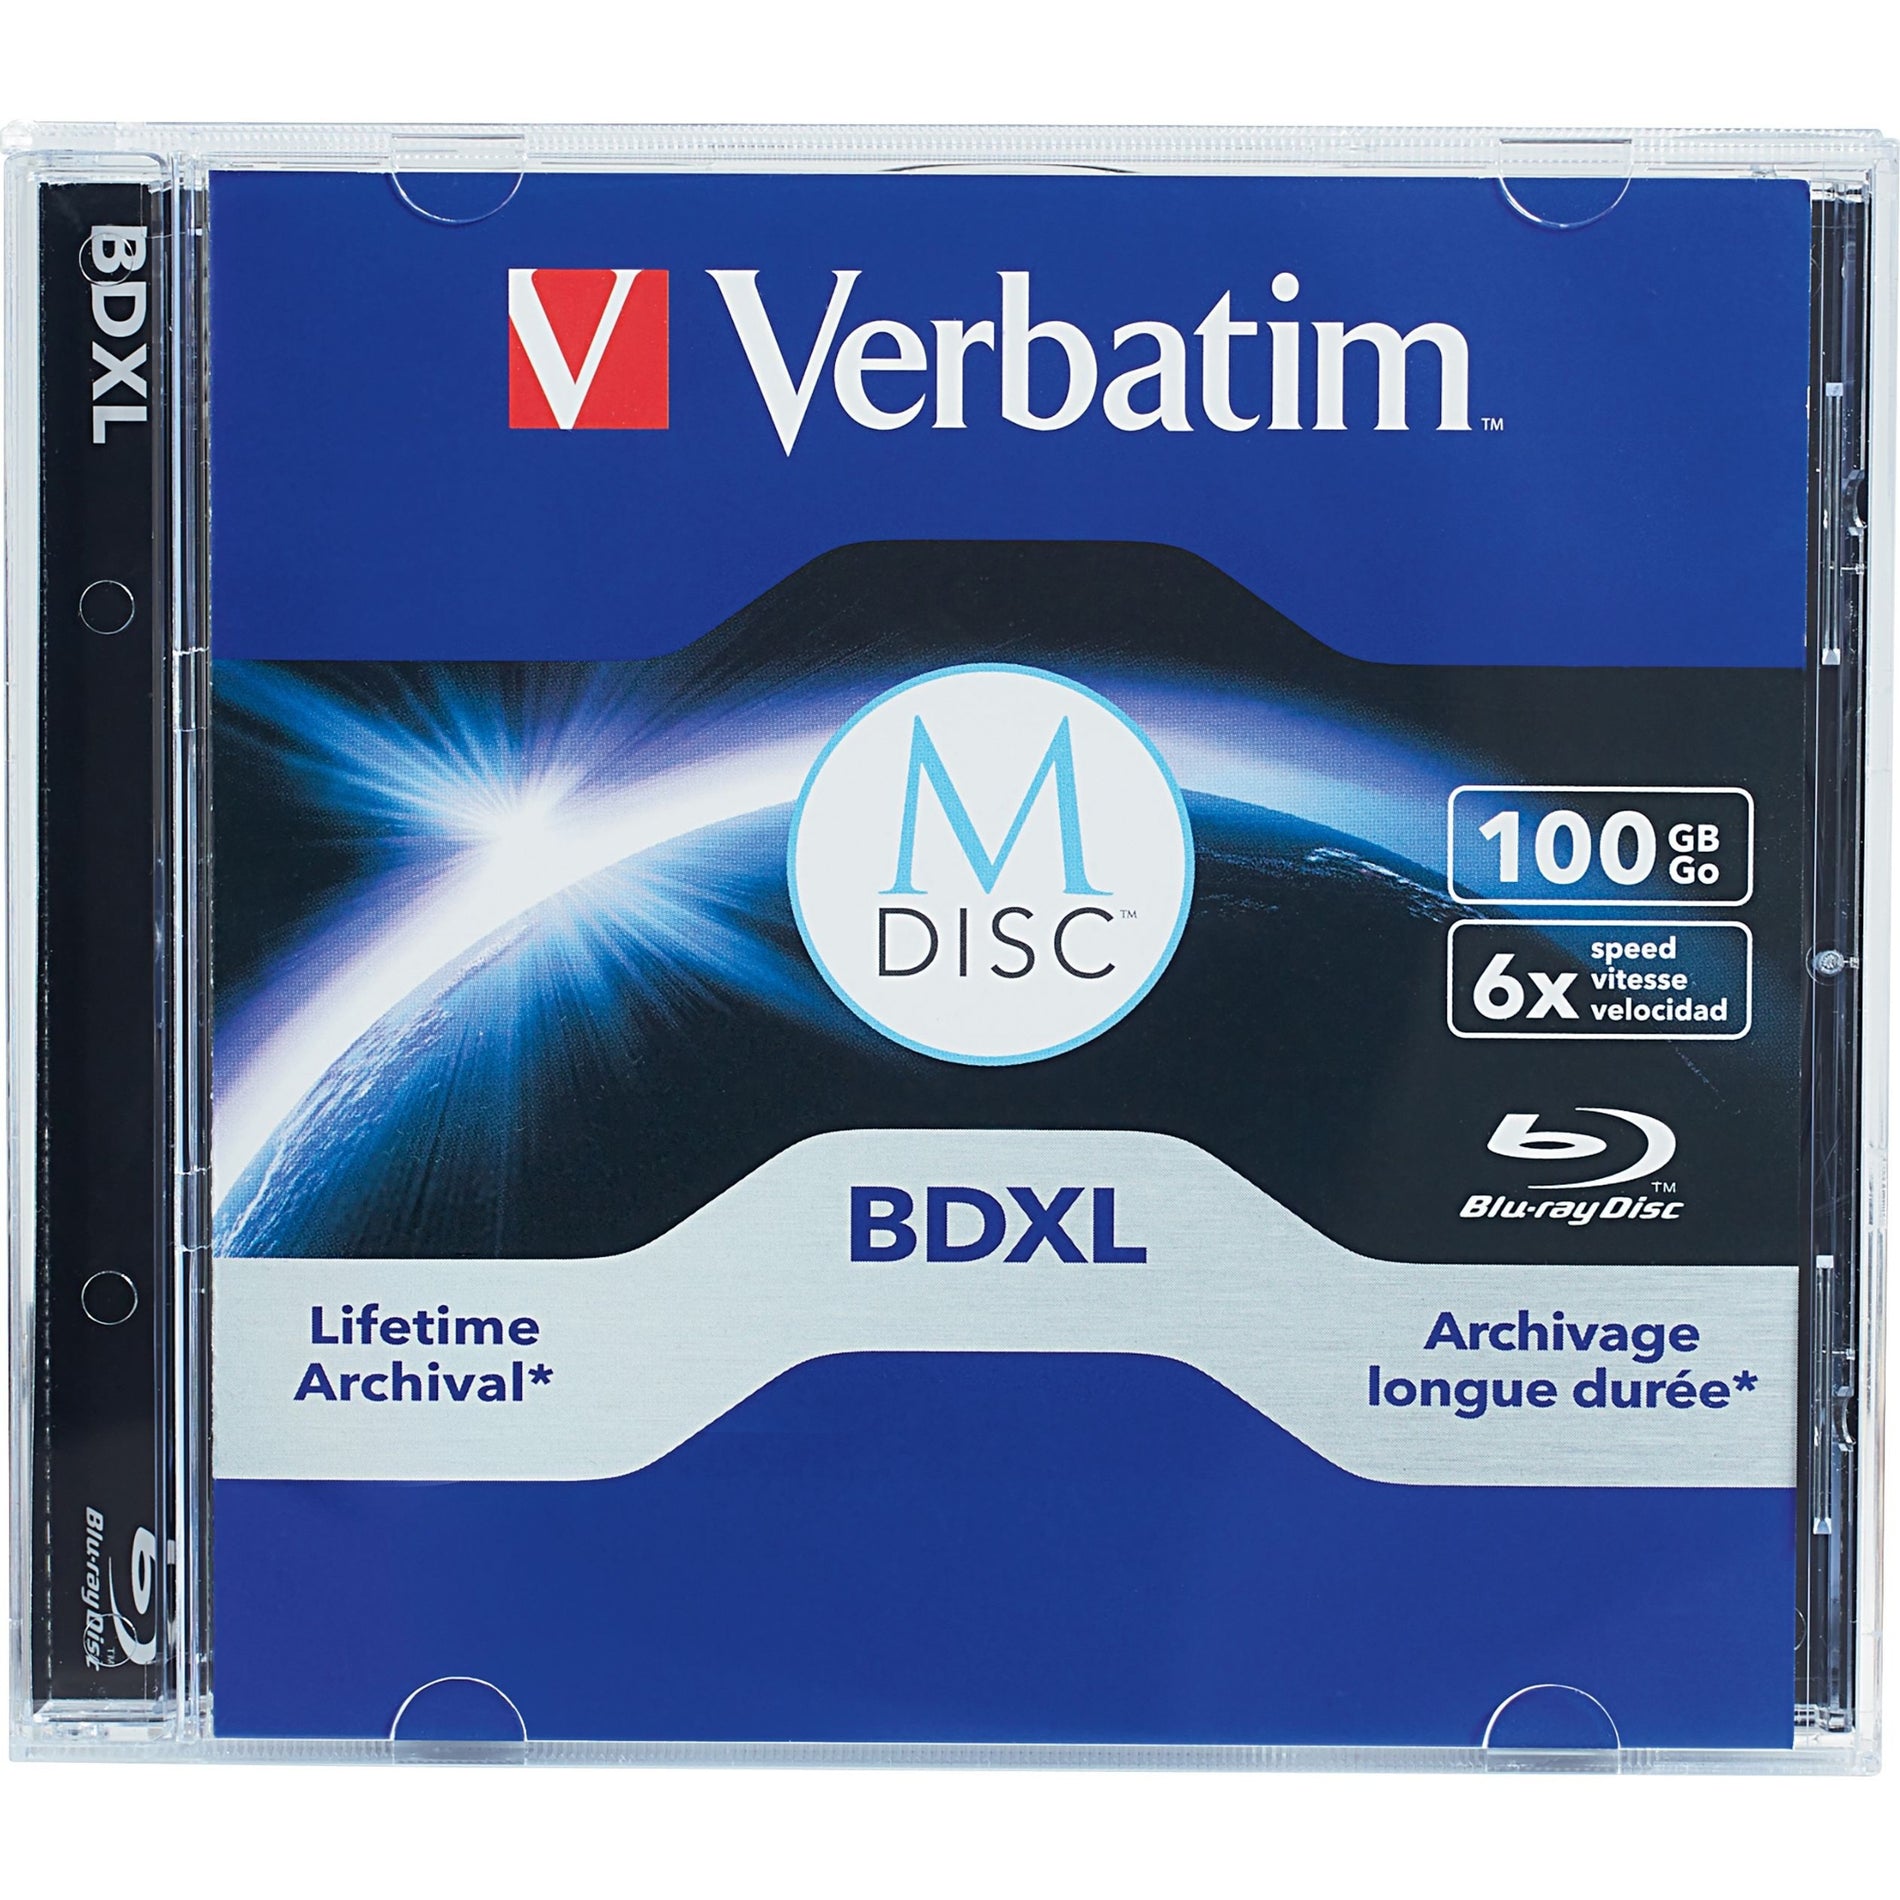 Verbatim 98912 M Disc BDXL 100GB 6X Blu-ray Recordable Media, Long-lasting Data Storage